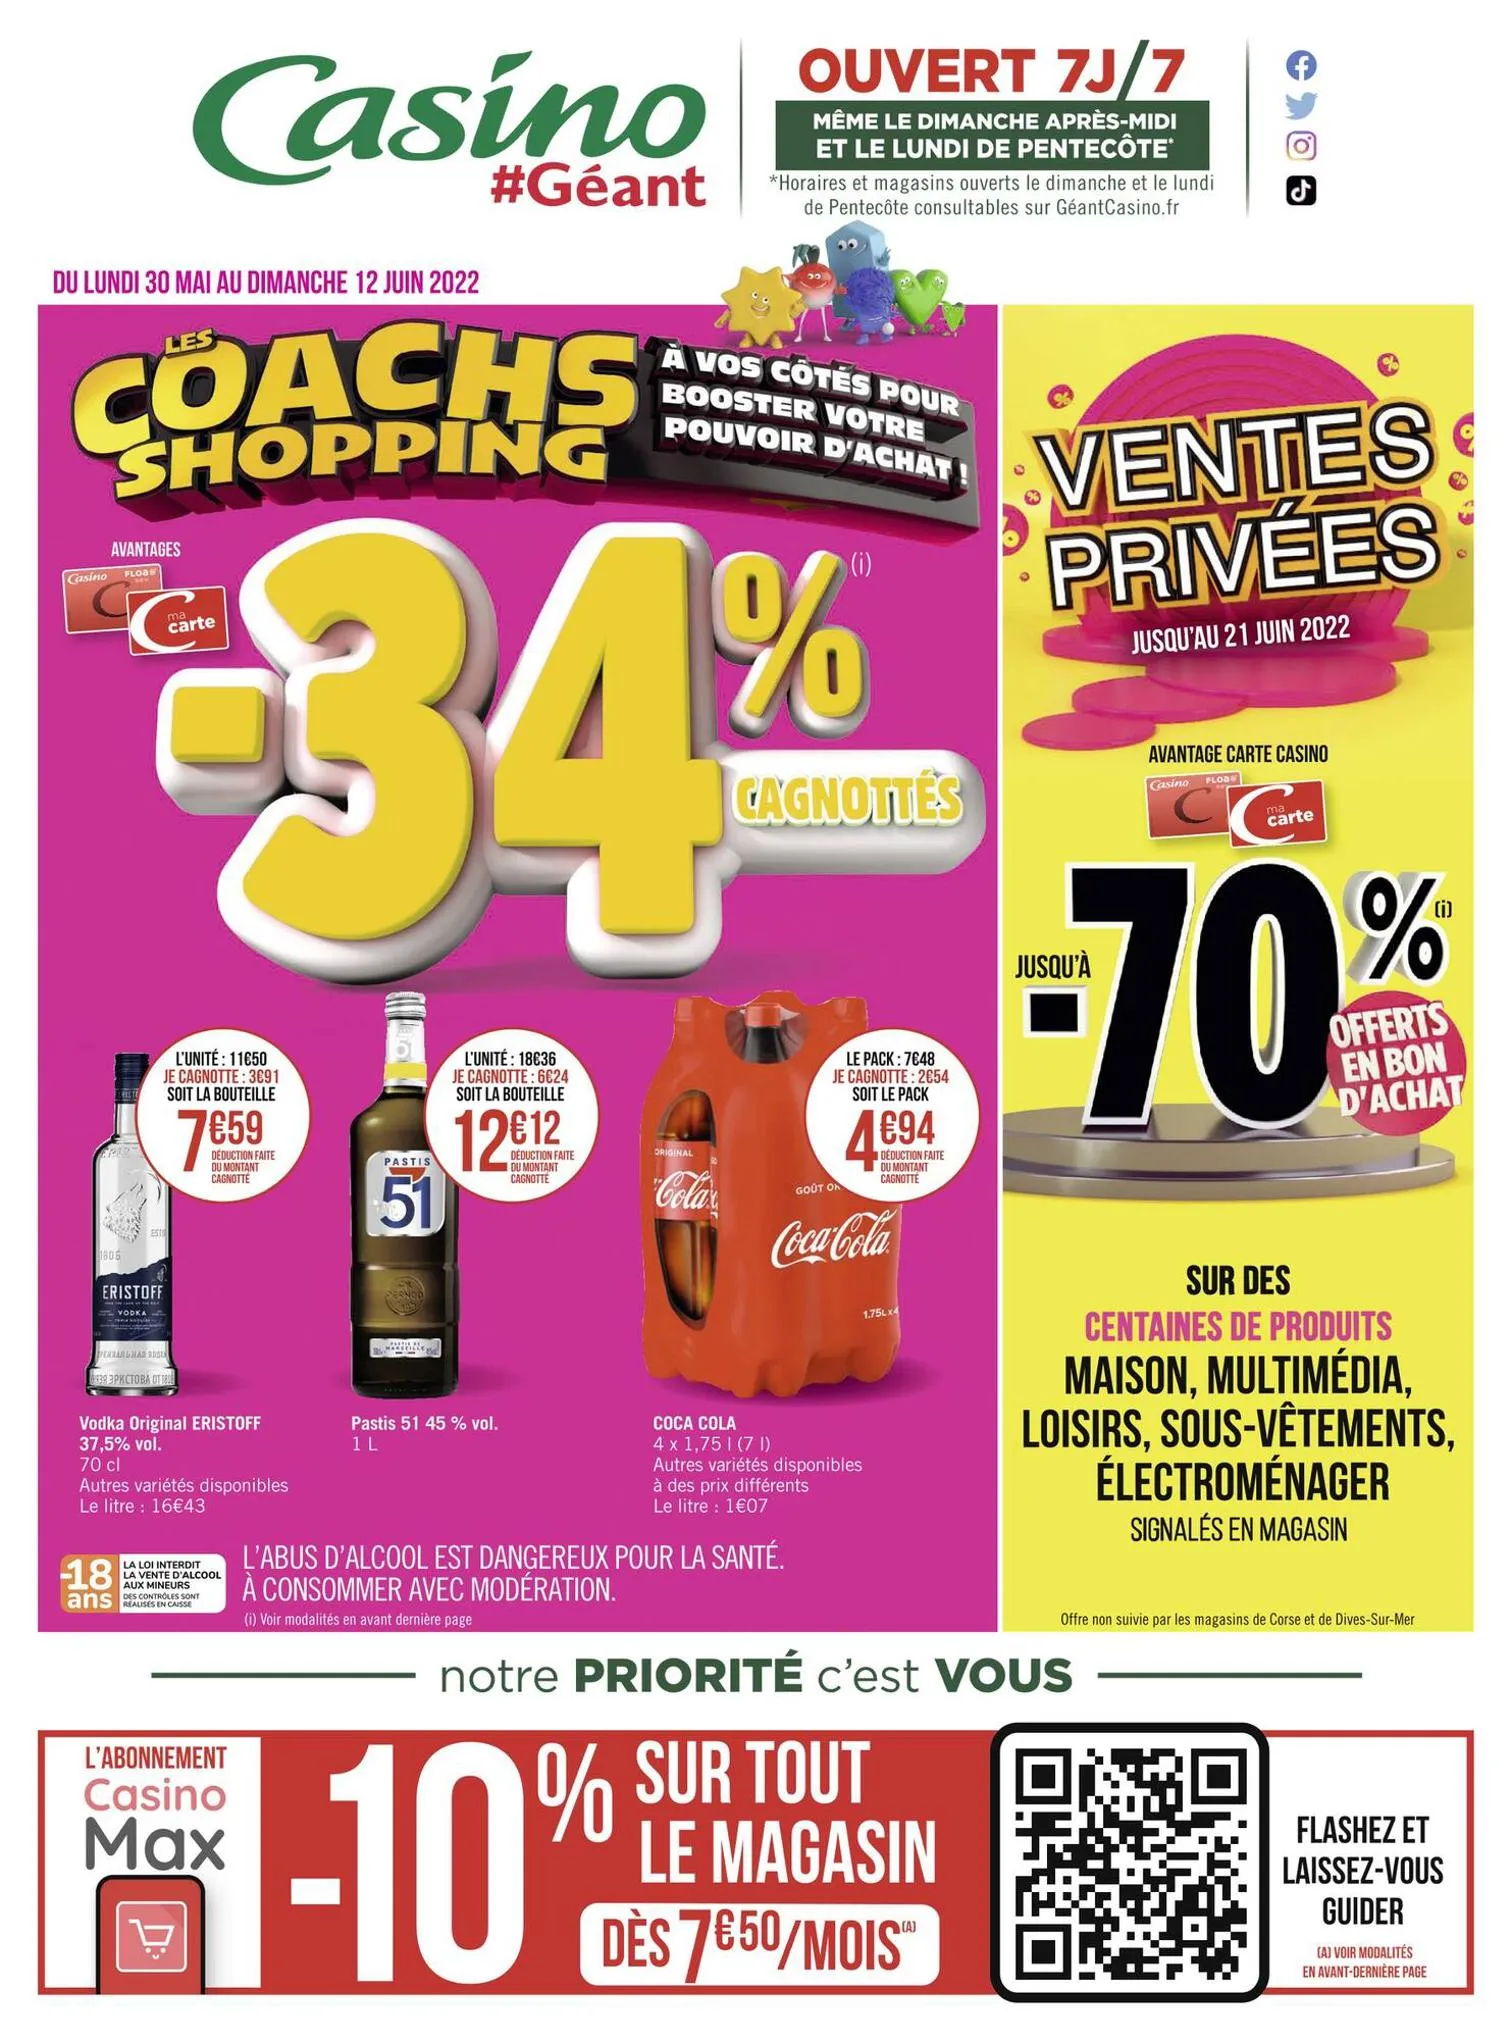 Catalogue Les coachs shopping, page 00084